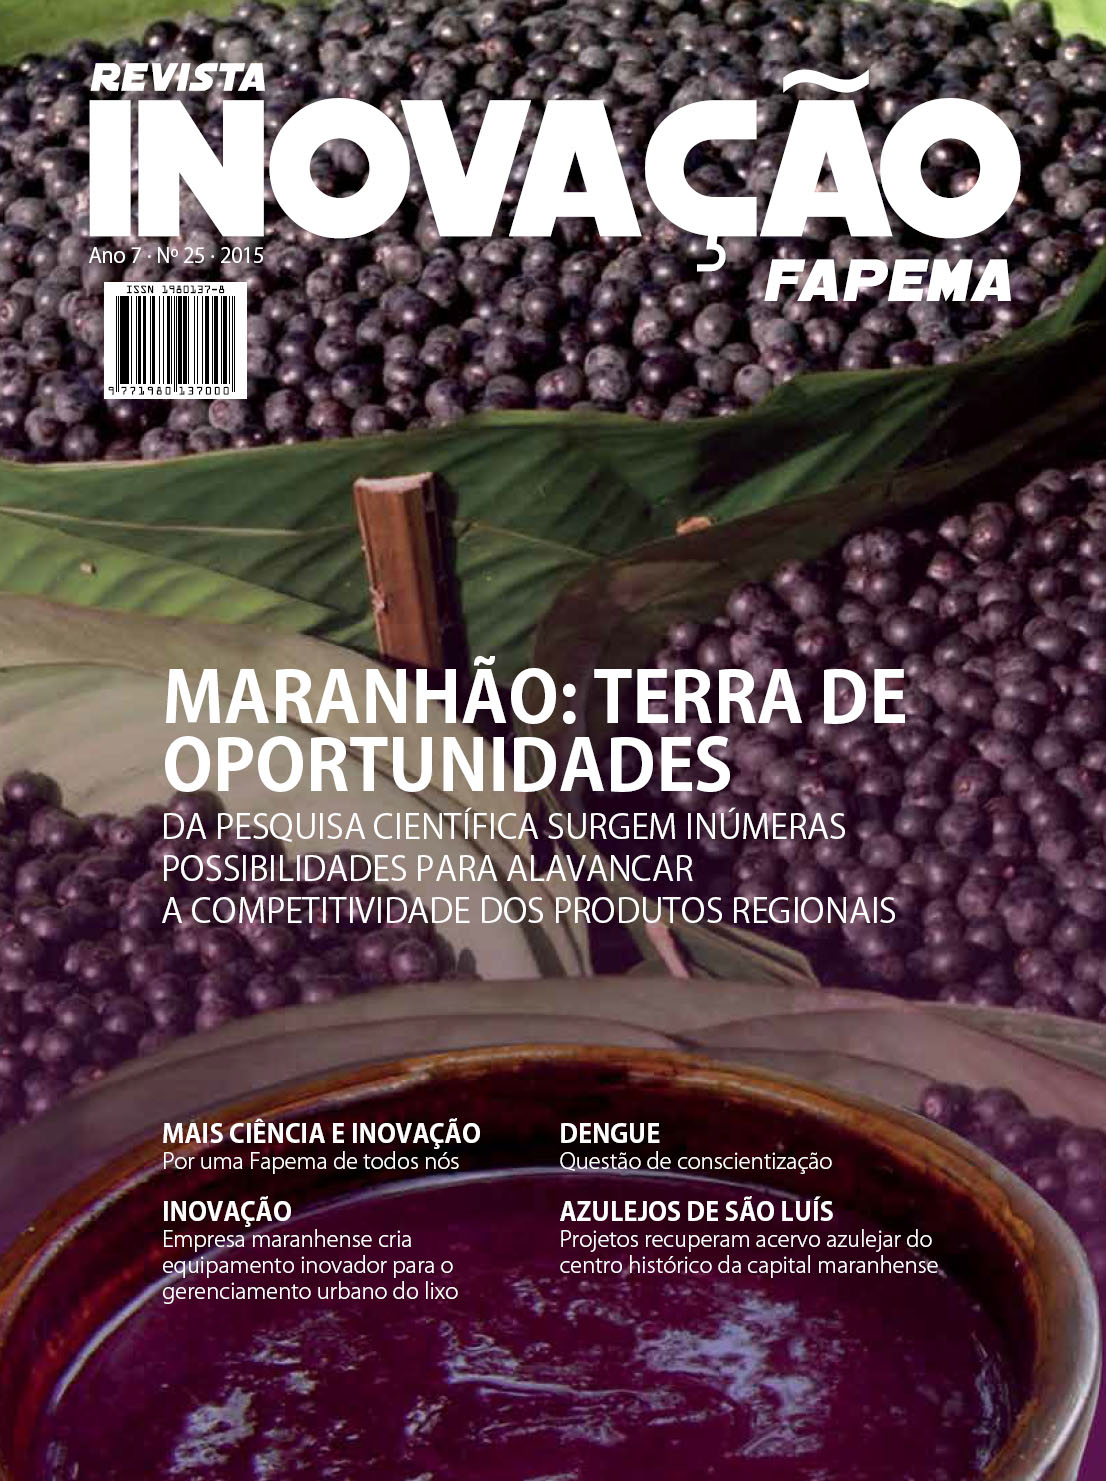 CAPAS revista Inovacao 01 - 26_0020_Camada 2